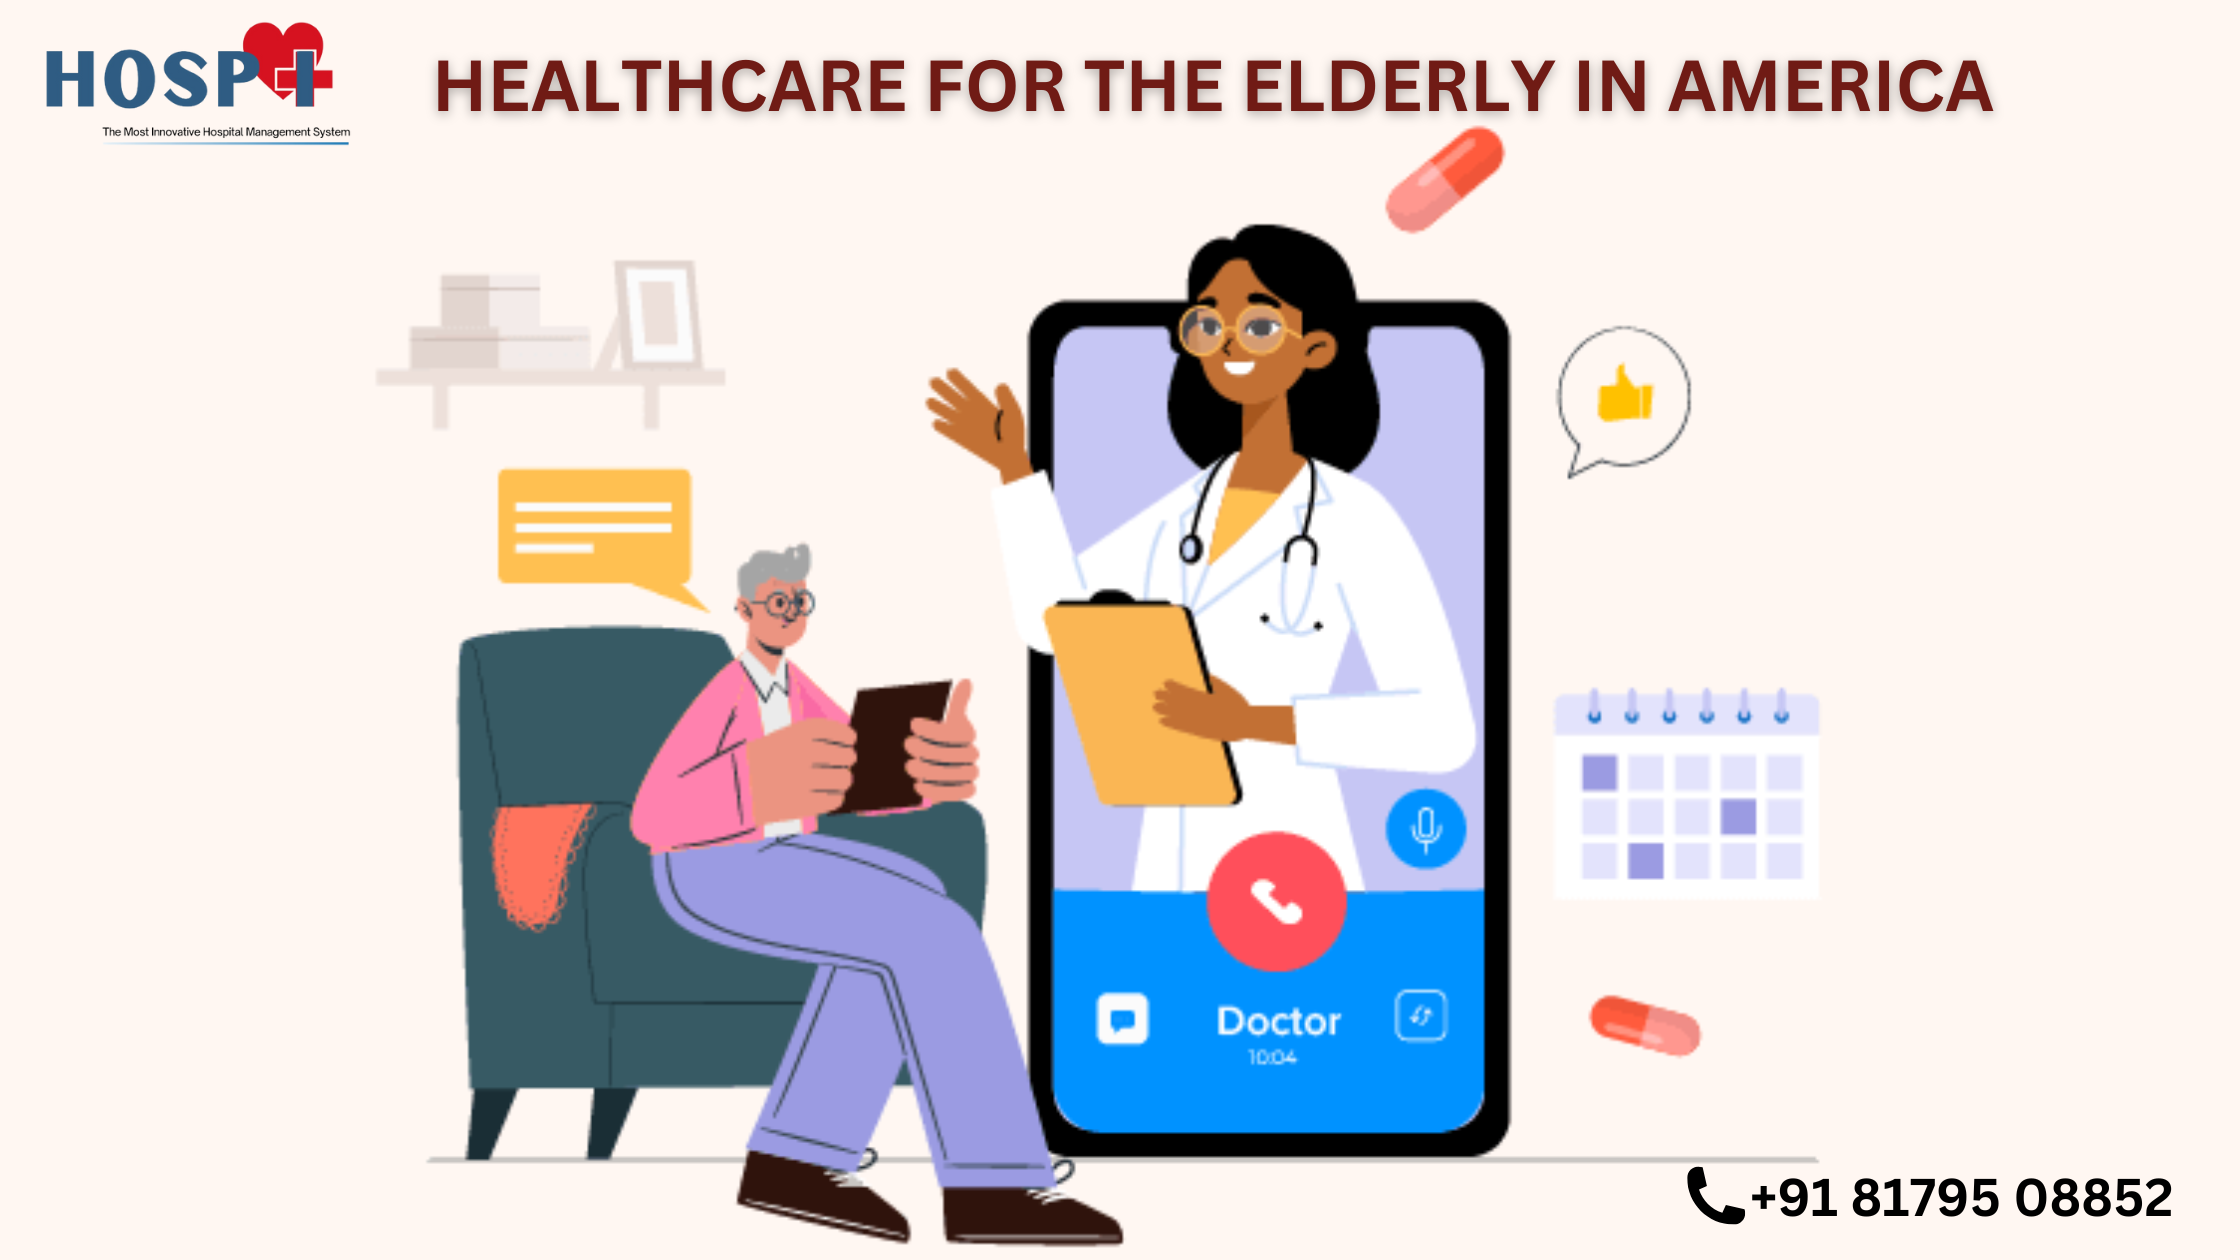 Healthcare for the elderly in America